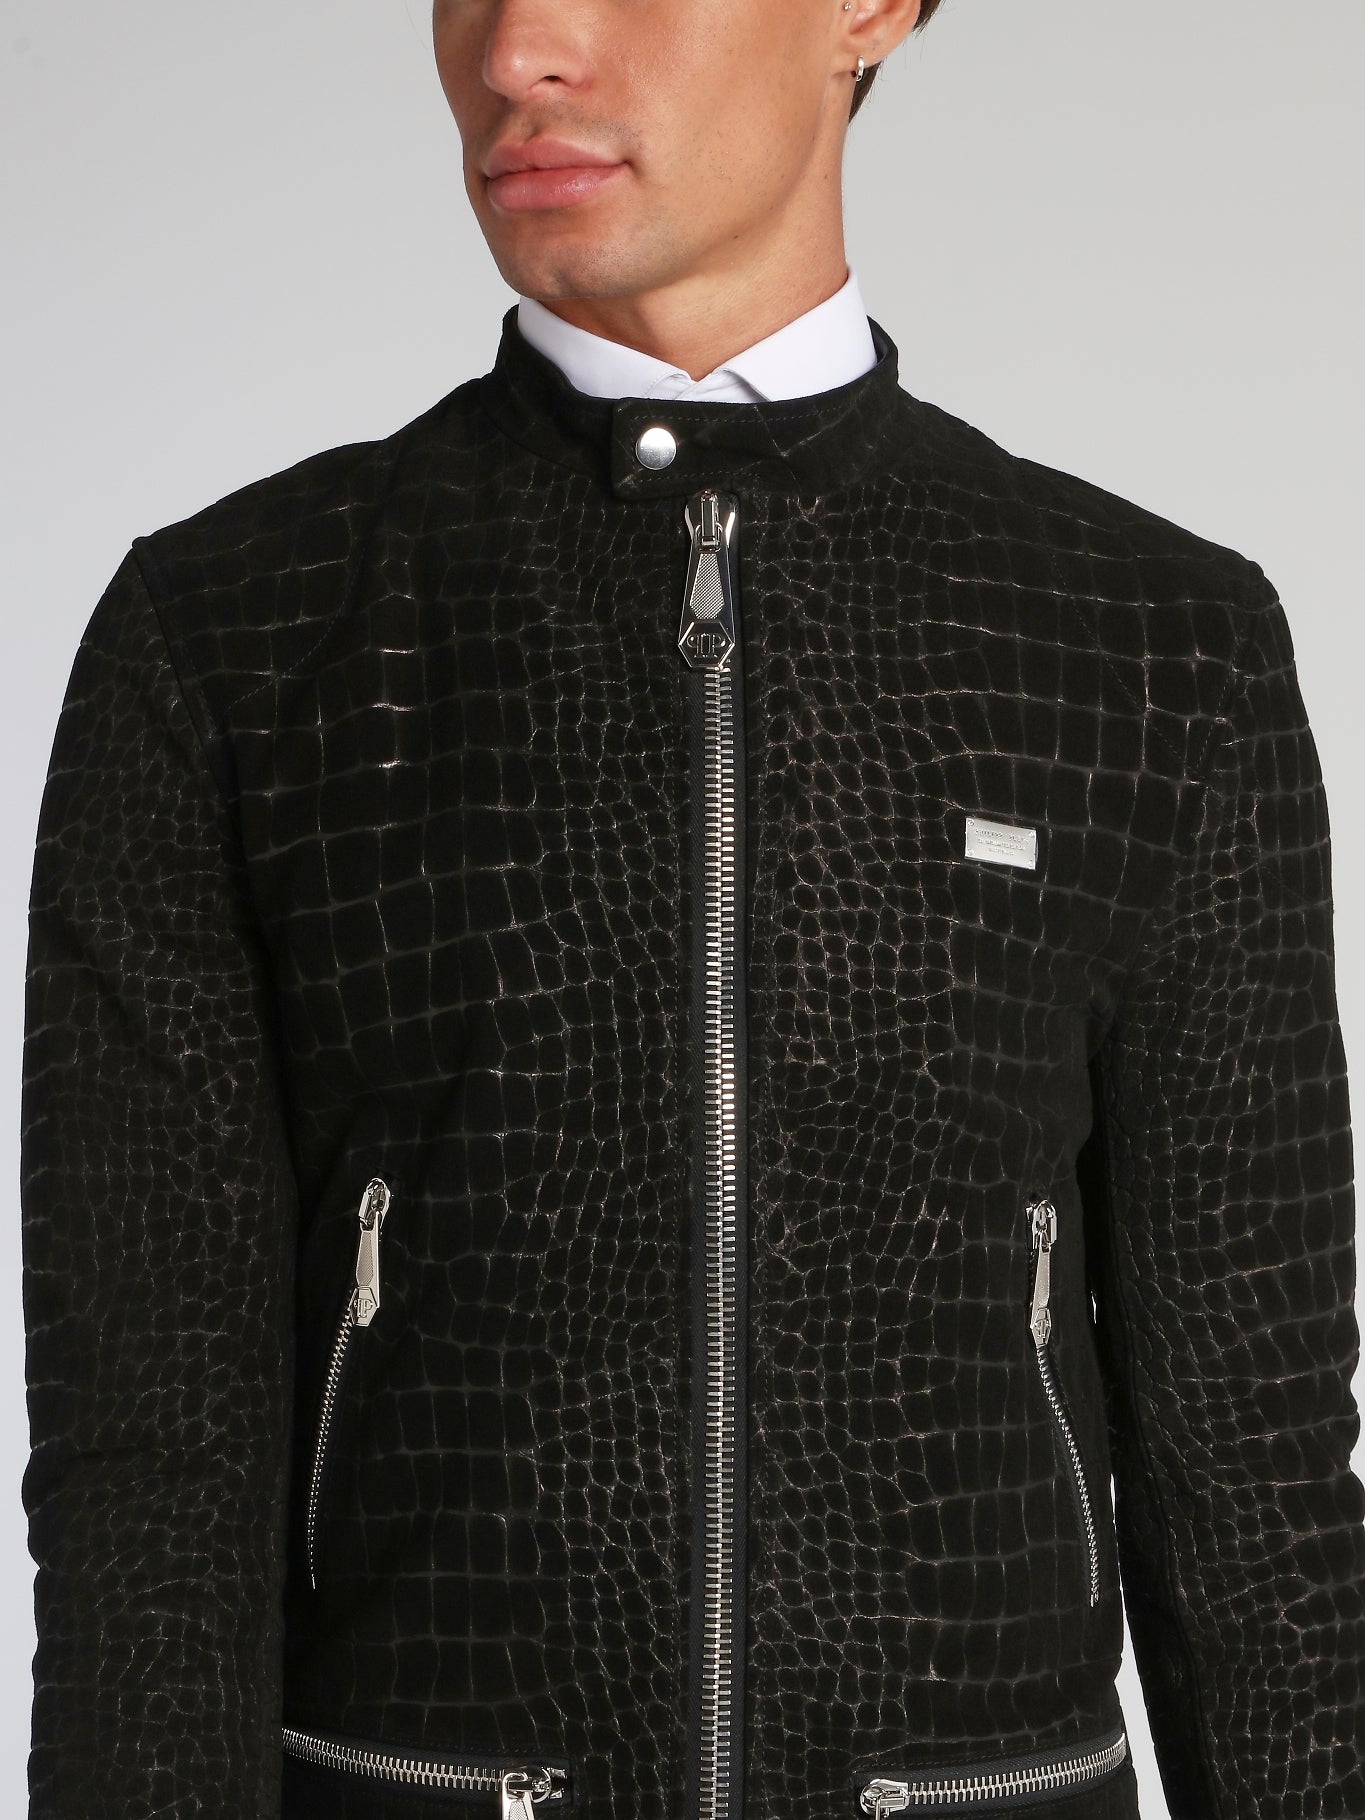 Black Reptilian Leather Moto Jacket